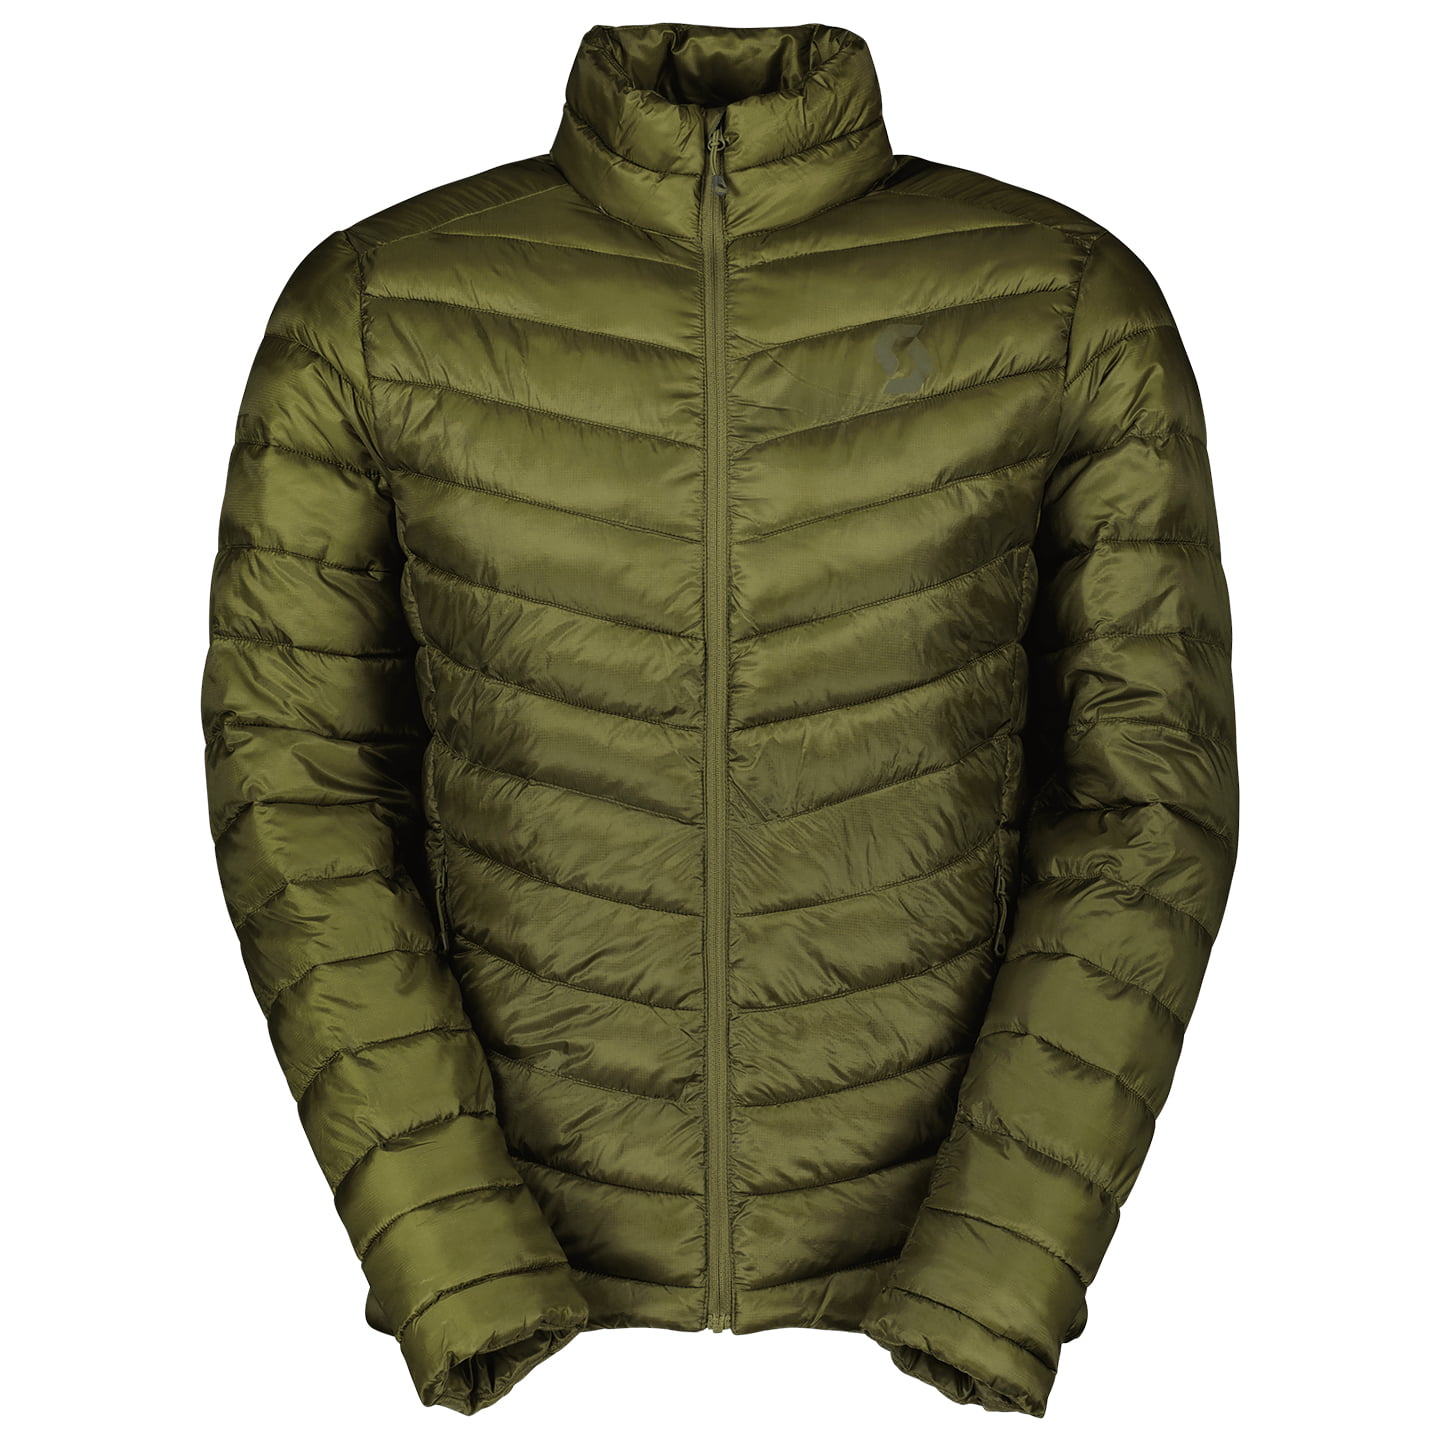 SCOTT Winter Jacket Insuloft Tech PL Thermal Jacket, for men, size XL, Cycle jacket, Cycle gear